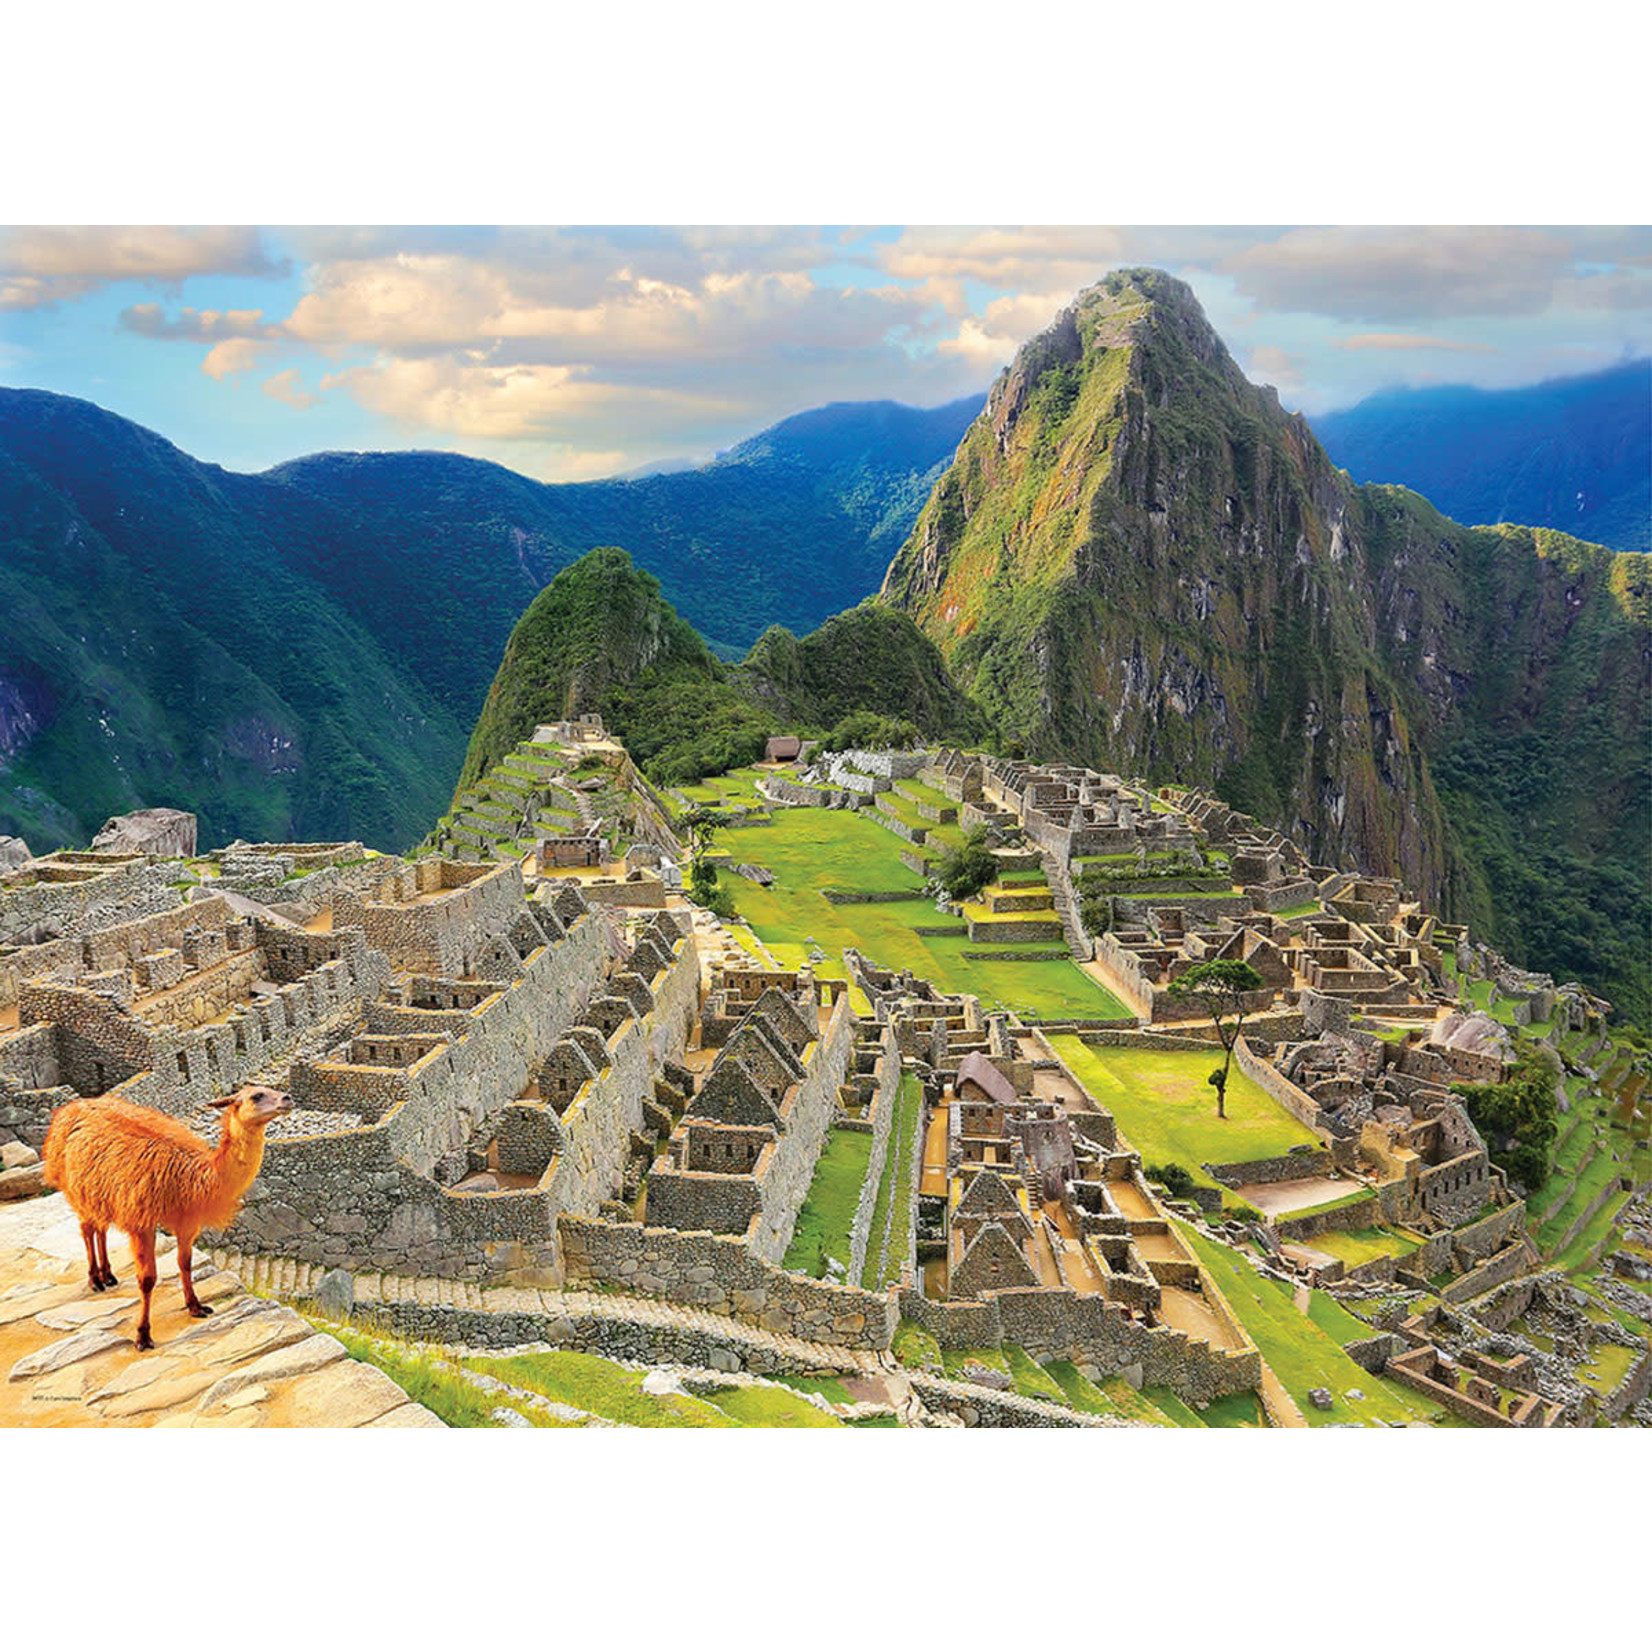 Eurographics Machu Picchu - Peru